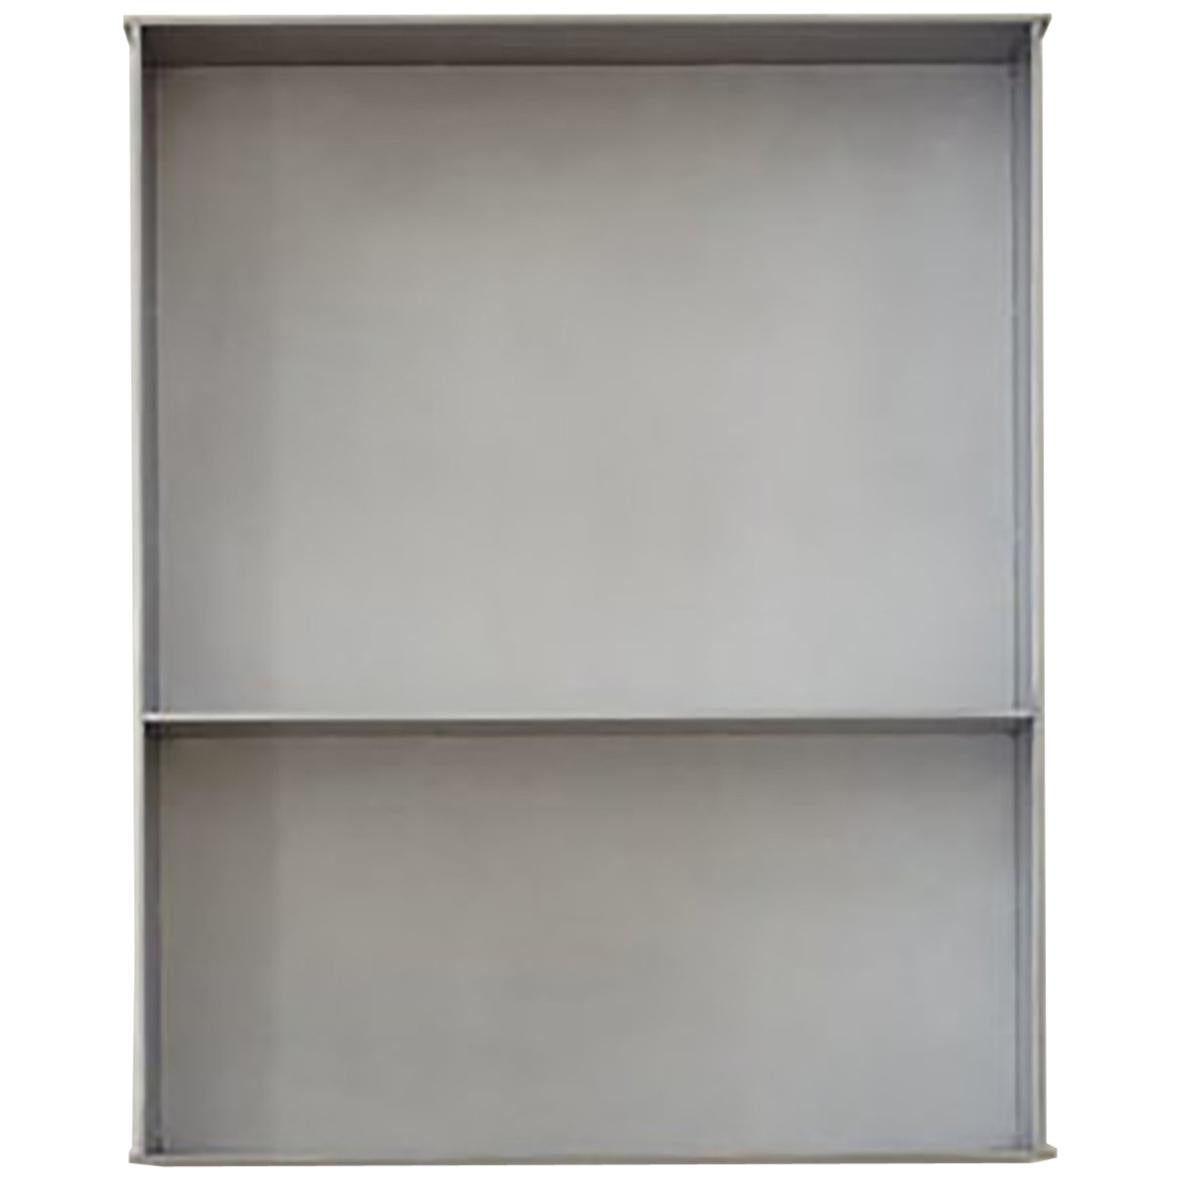 U.E.S. 'Upper East Side' Shelf in Waxed Aluminium Plate by Jonathan Nesci For Sale